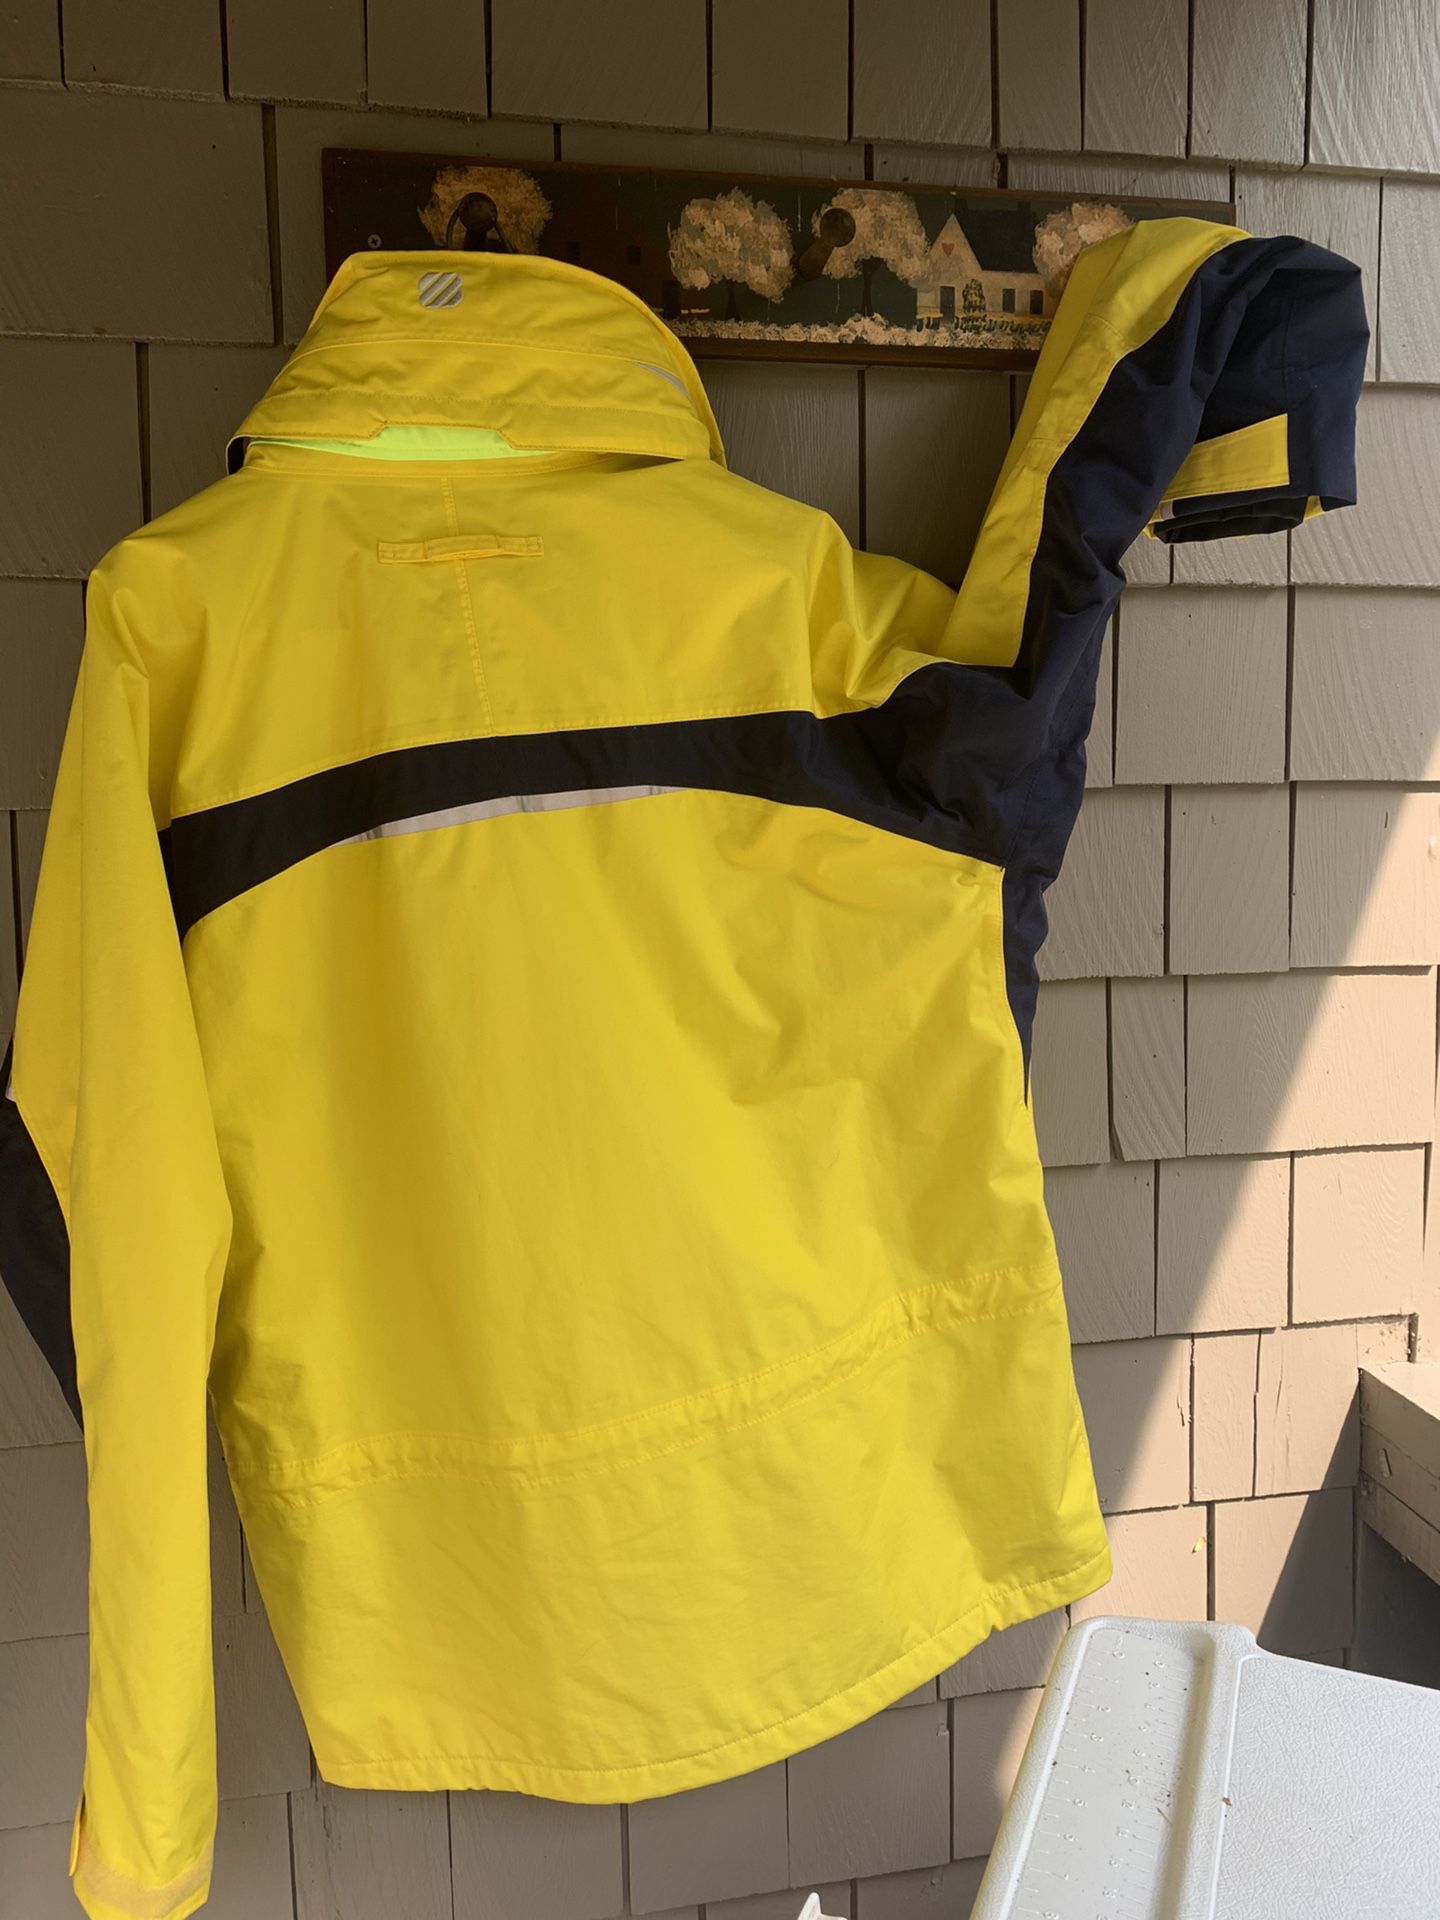 Man’s Large Insulated Rain Jacket   New